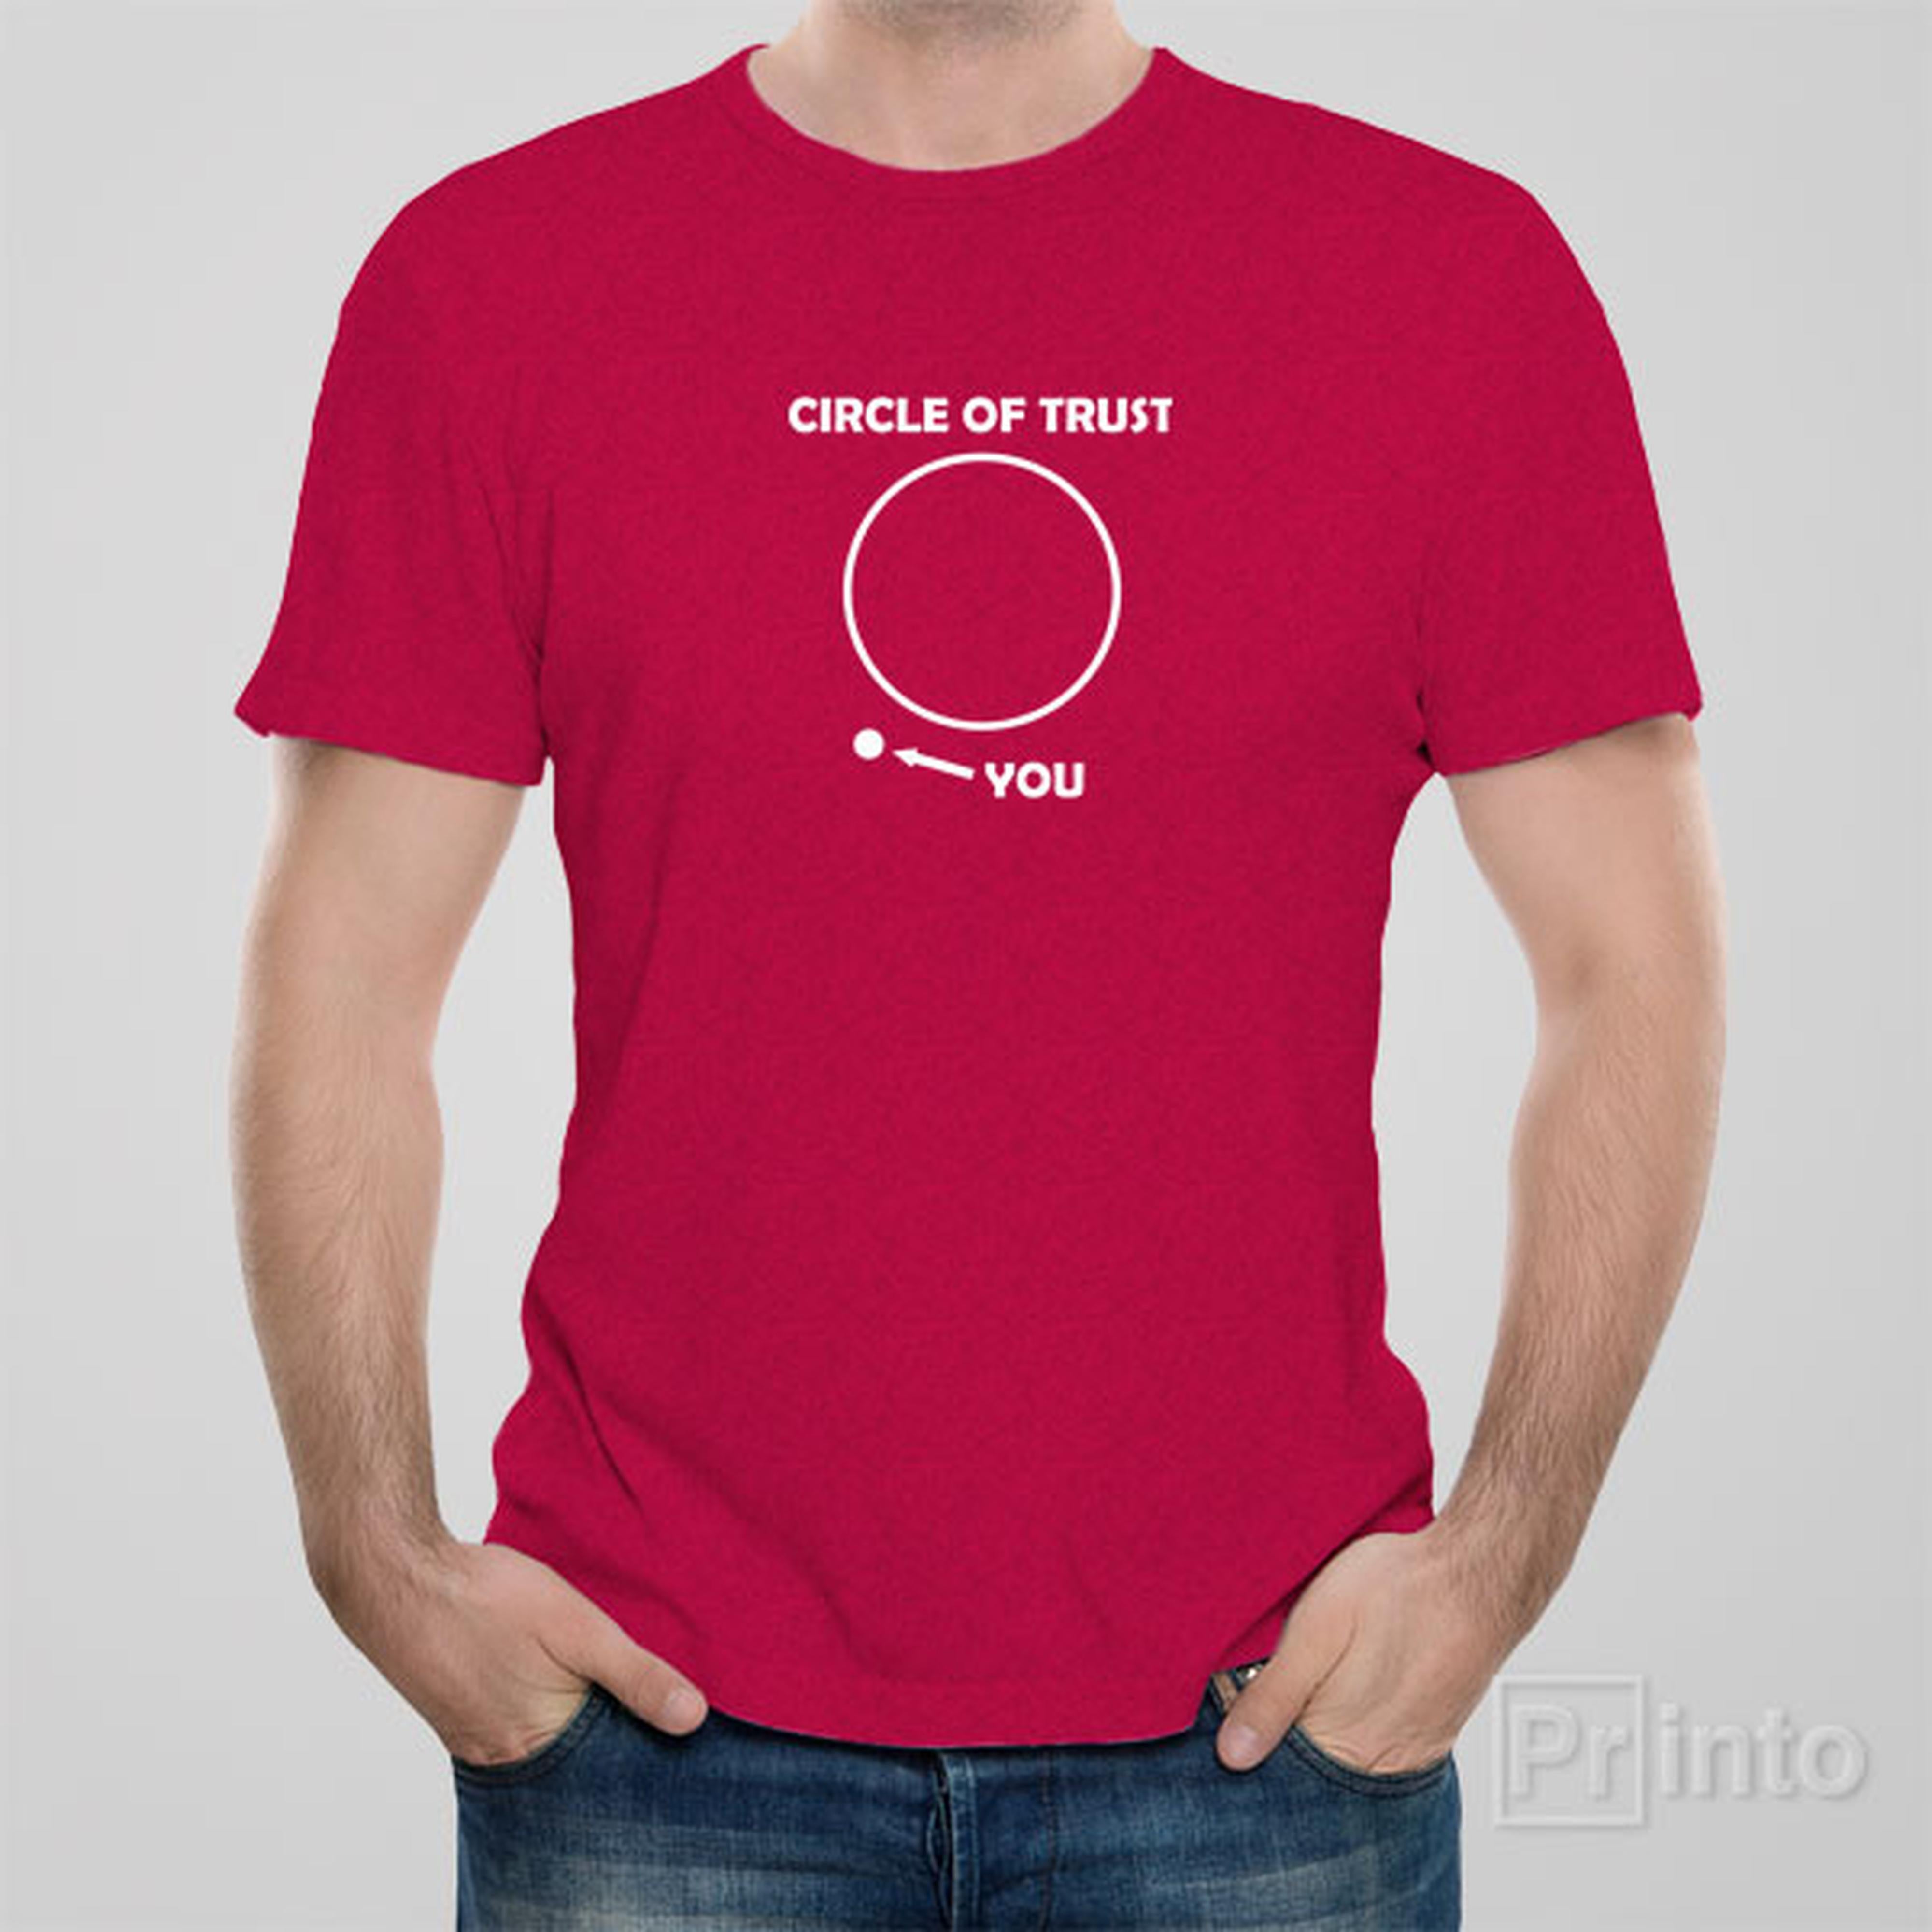 circle-of-trust-t-shirt